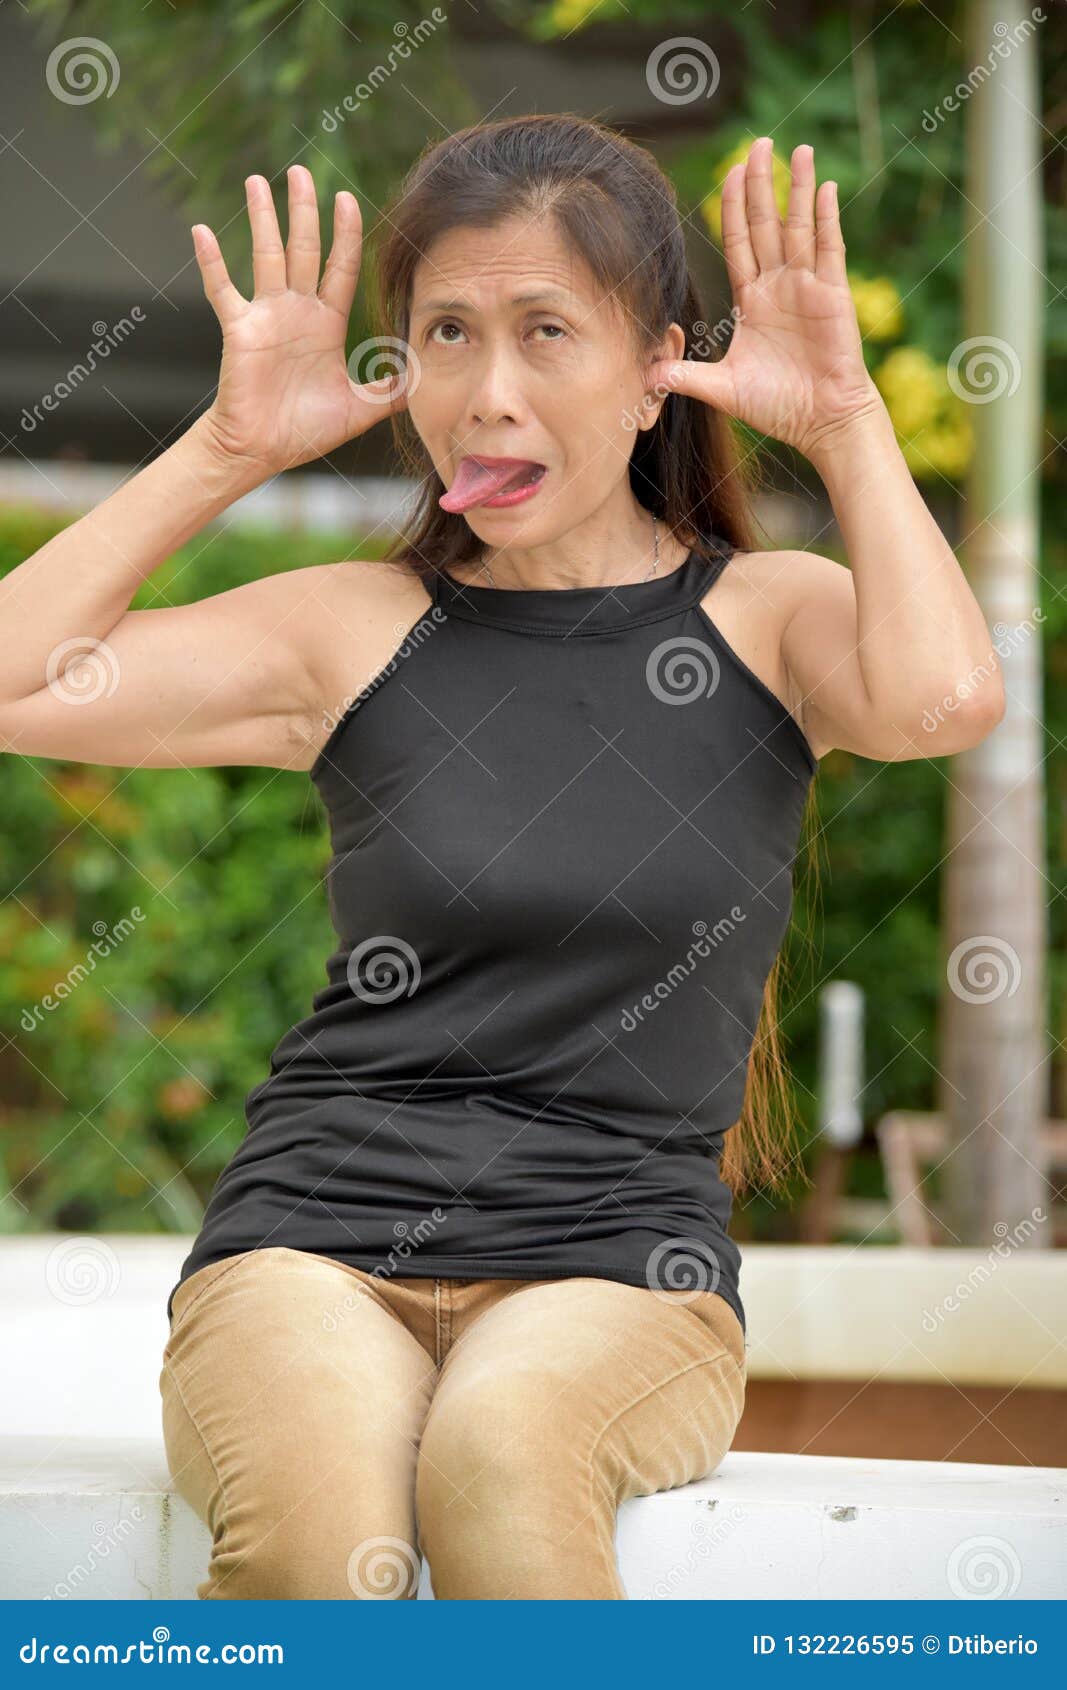 Filipina Adult Female Making Funny Faces Stock Image Image Of Asian 0907